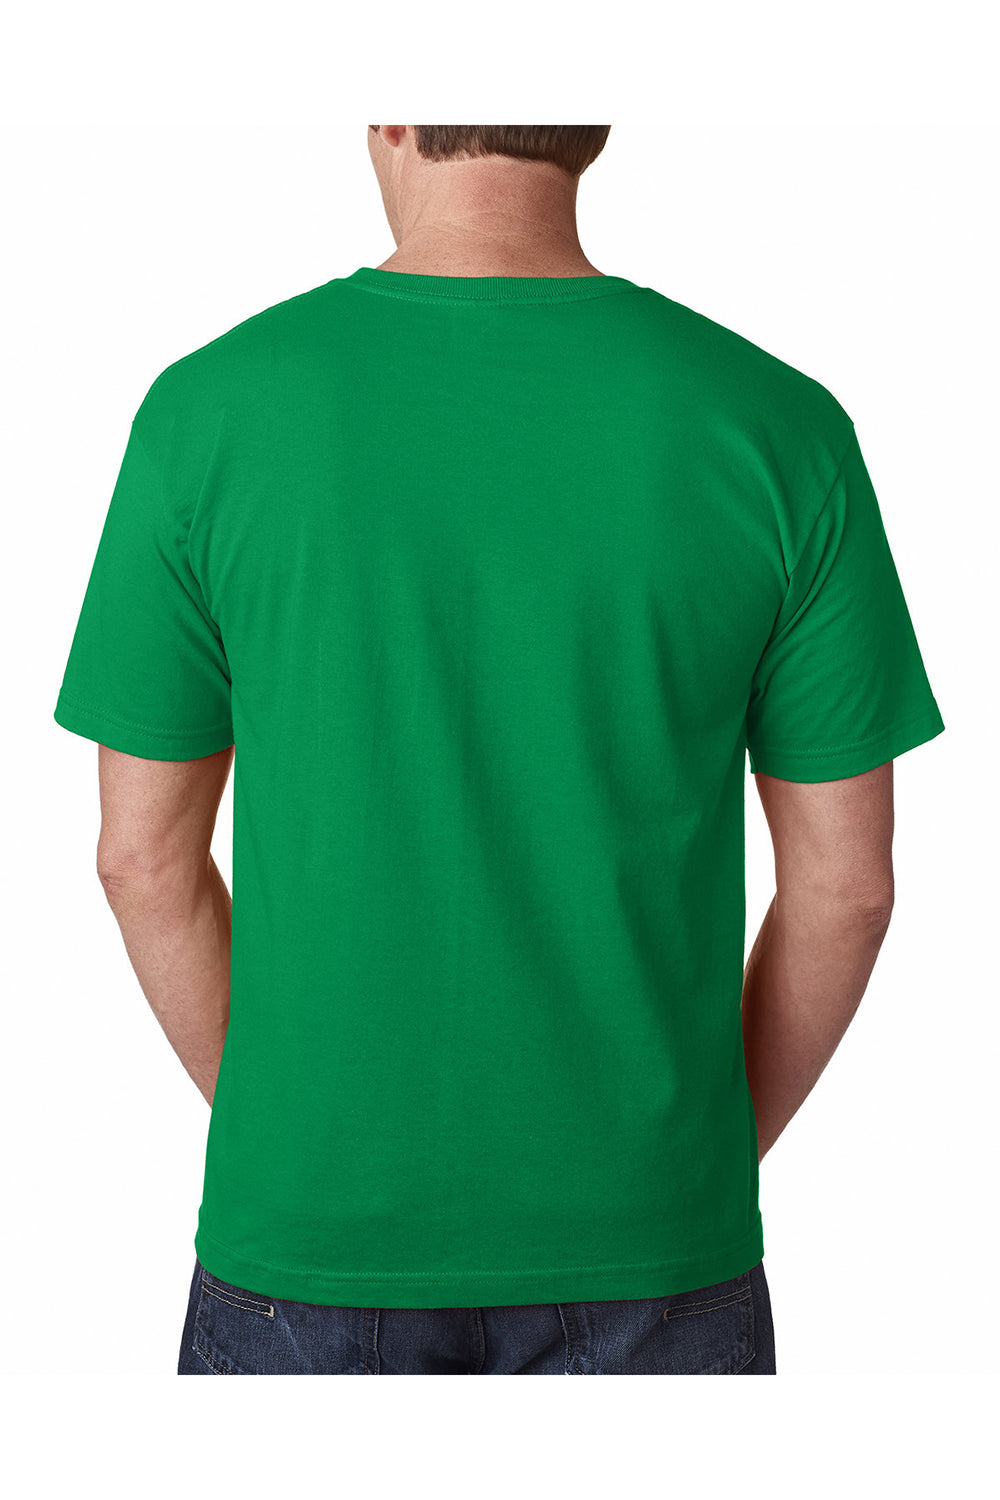 Bayside BA5040 Mens USA Made Short Sleeve Crewneck T-Shirt Irish Kelly Green Model Back